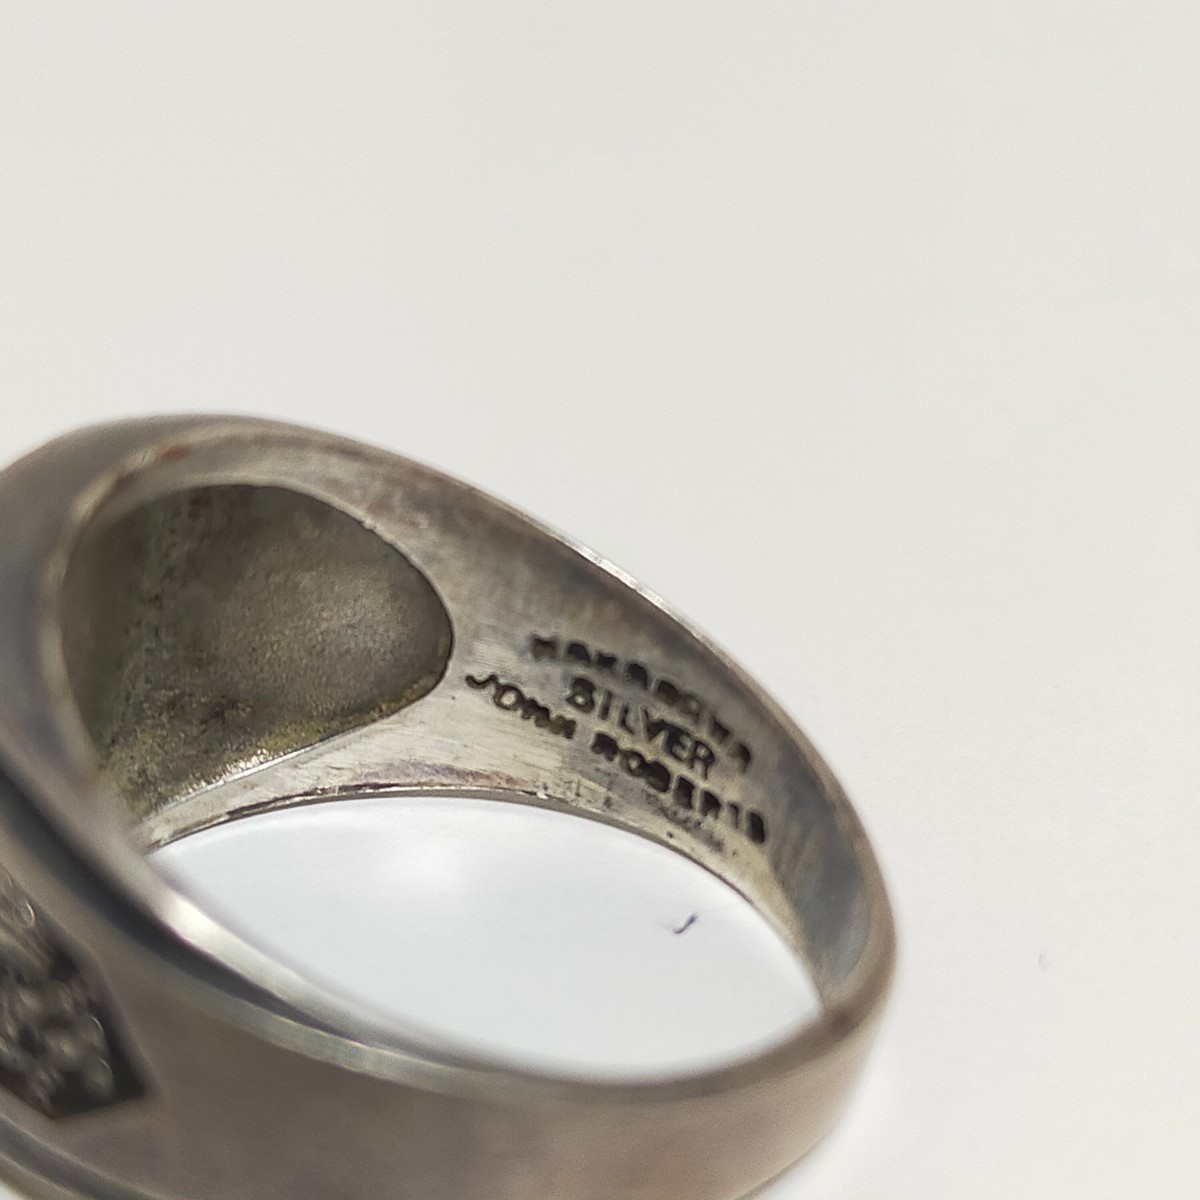 nakagawa john robertsnaka сторона John осел -tsu кольцо "college ring" кольцо 15 номер silver925/ серебряный 925